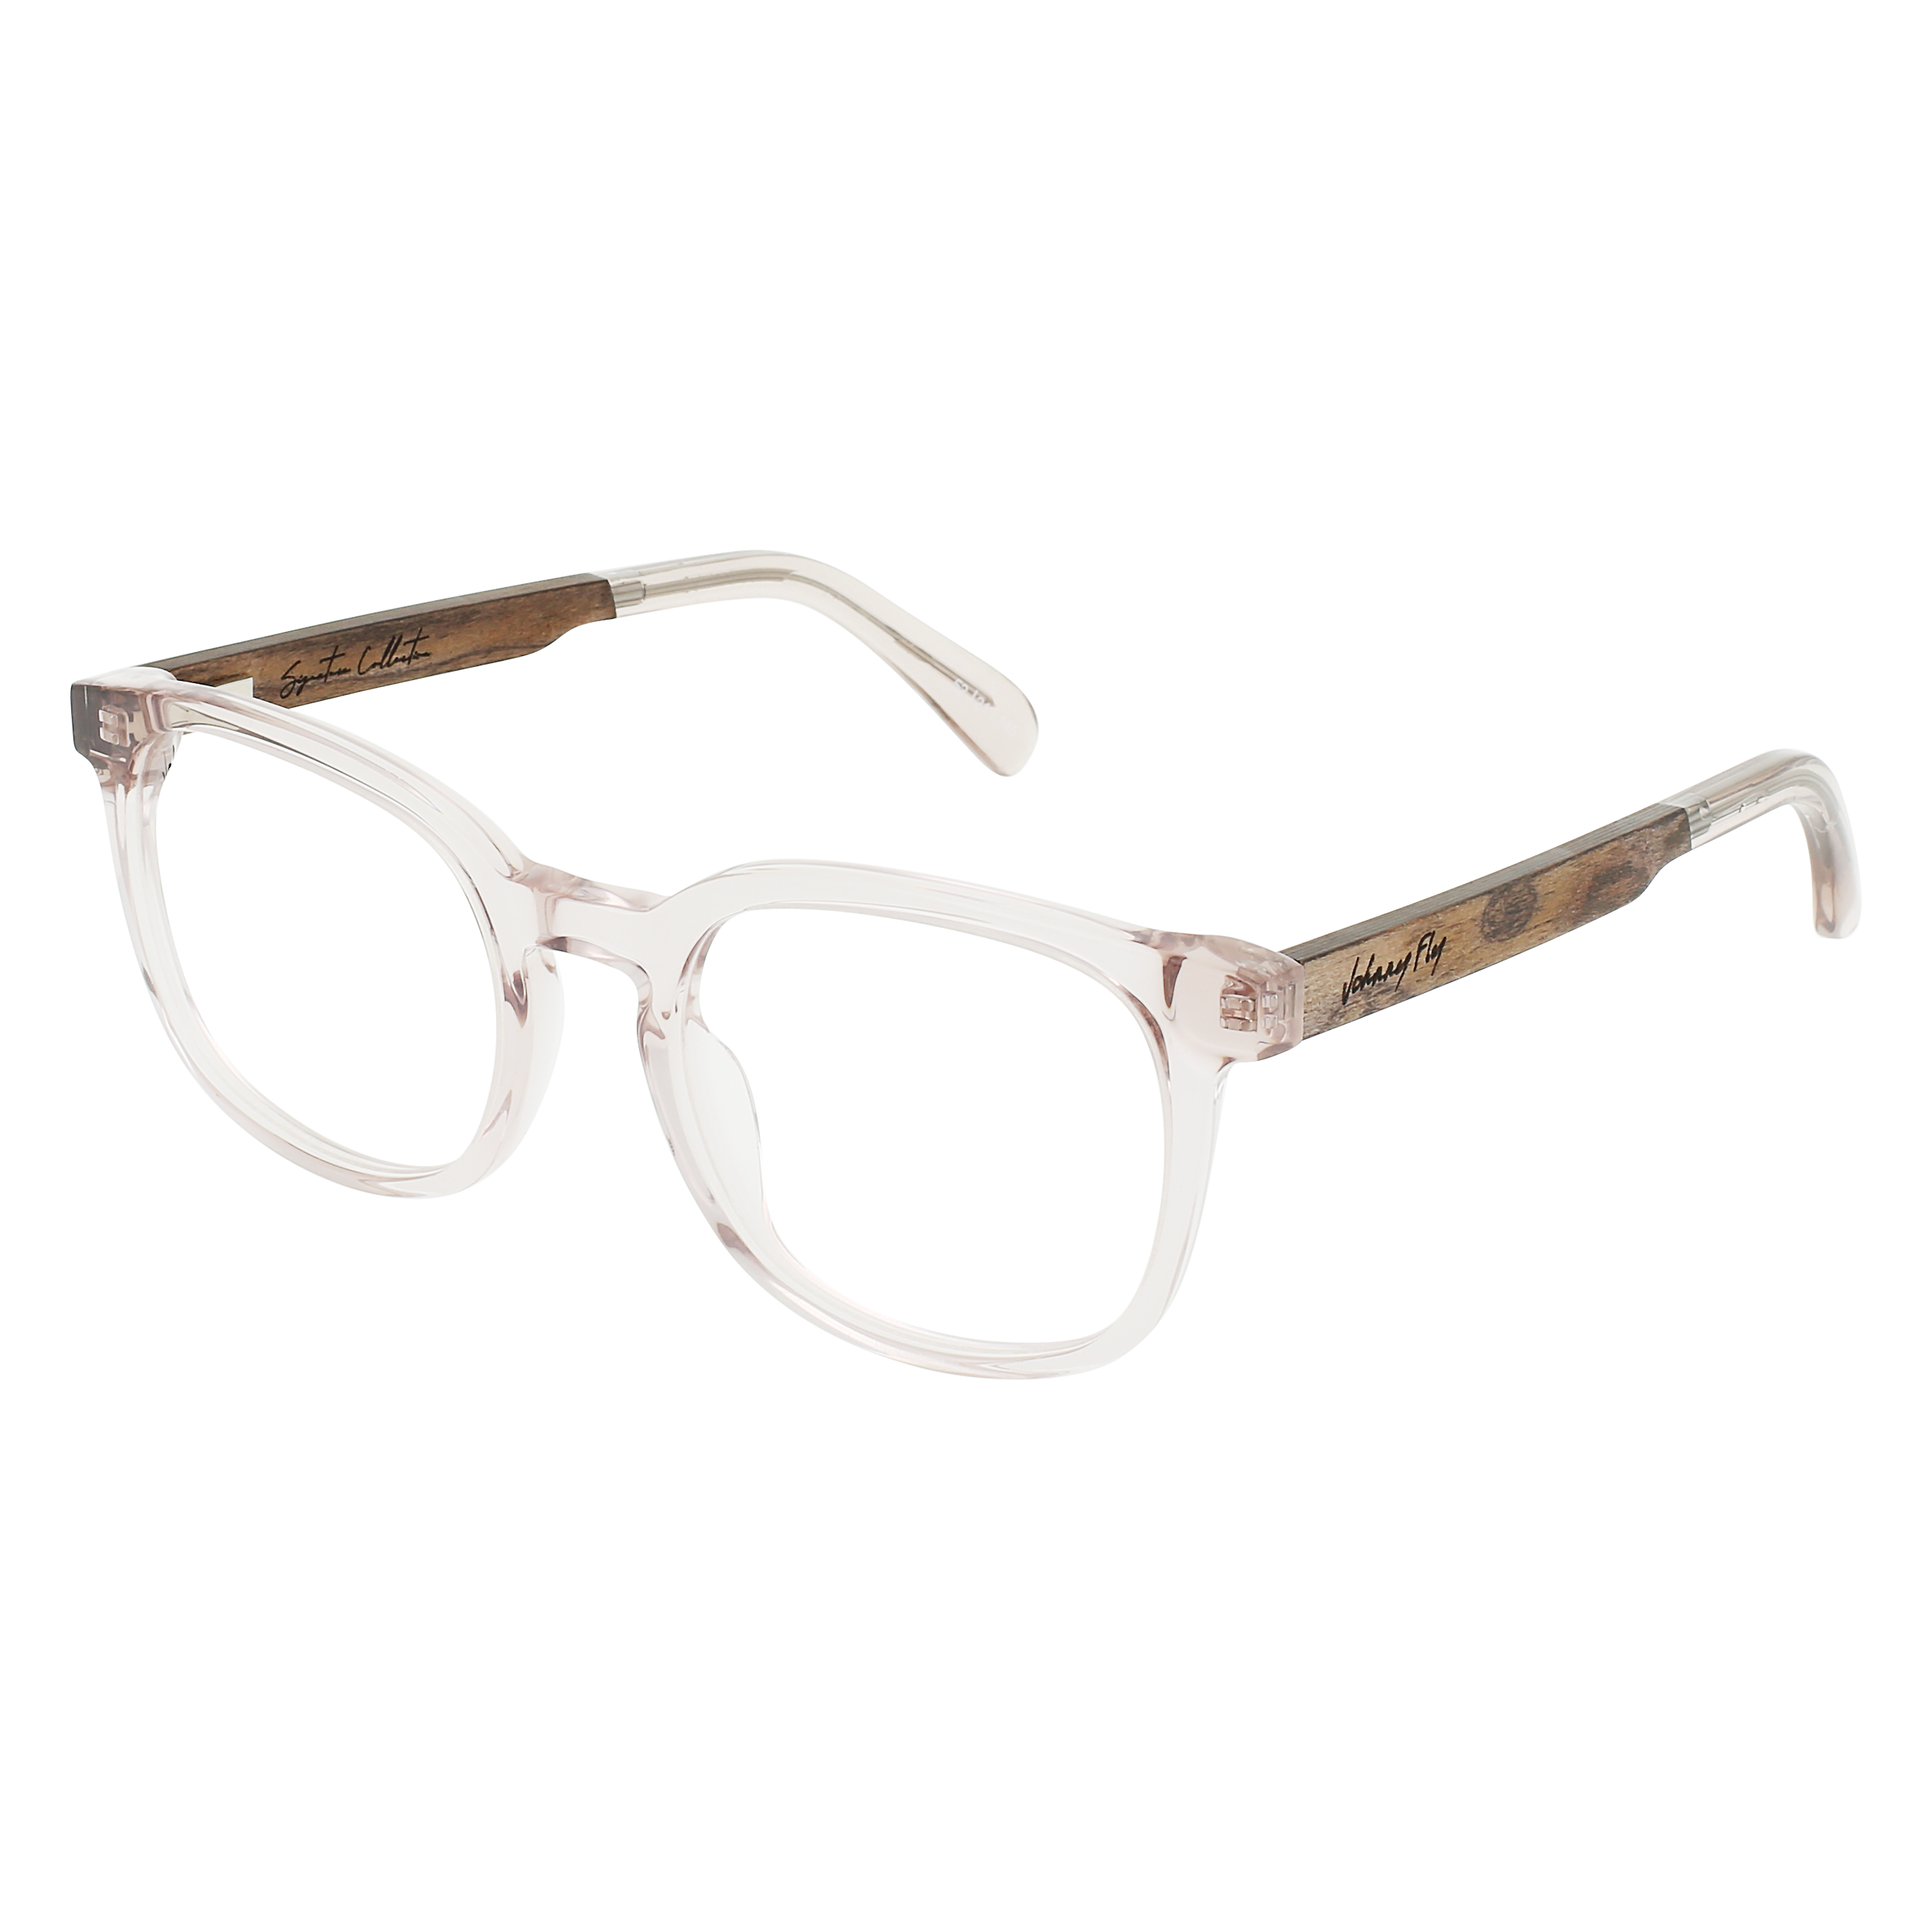 ALTITUDE Eyeglasses Frame - Champagne- Johnny Fly | ALT-CHAM-RX-EBN | | 